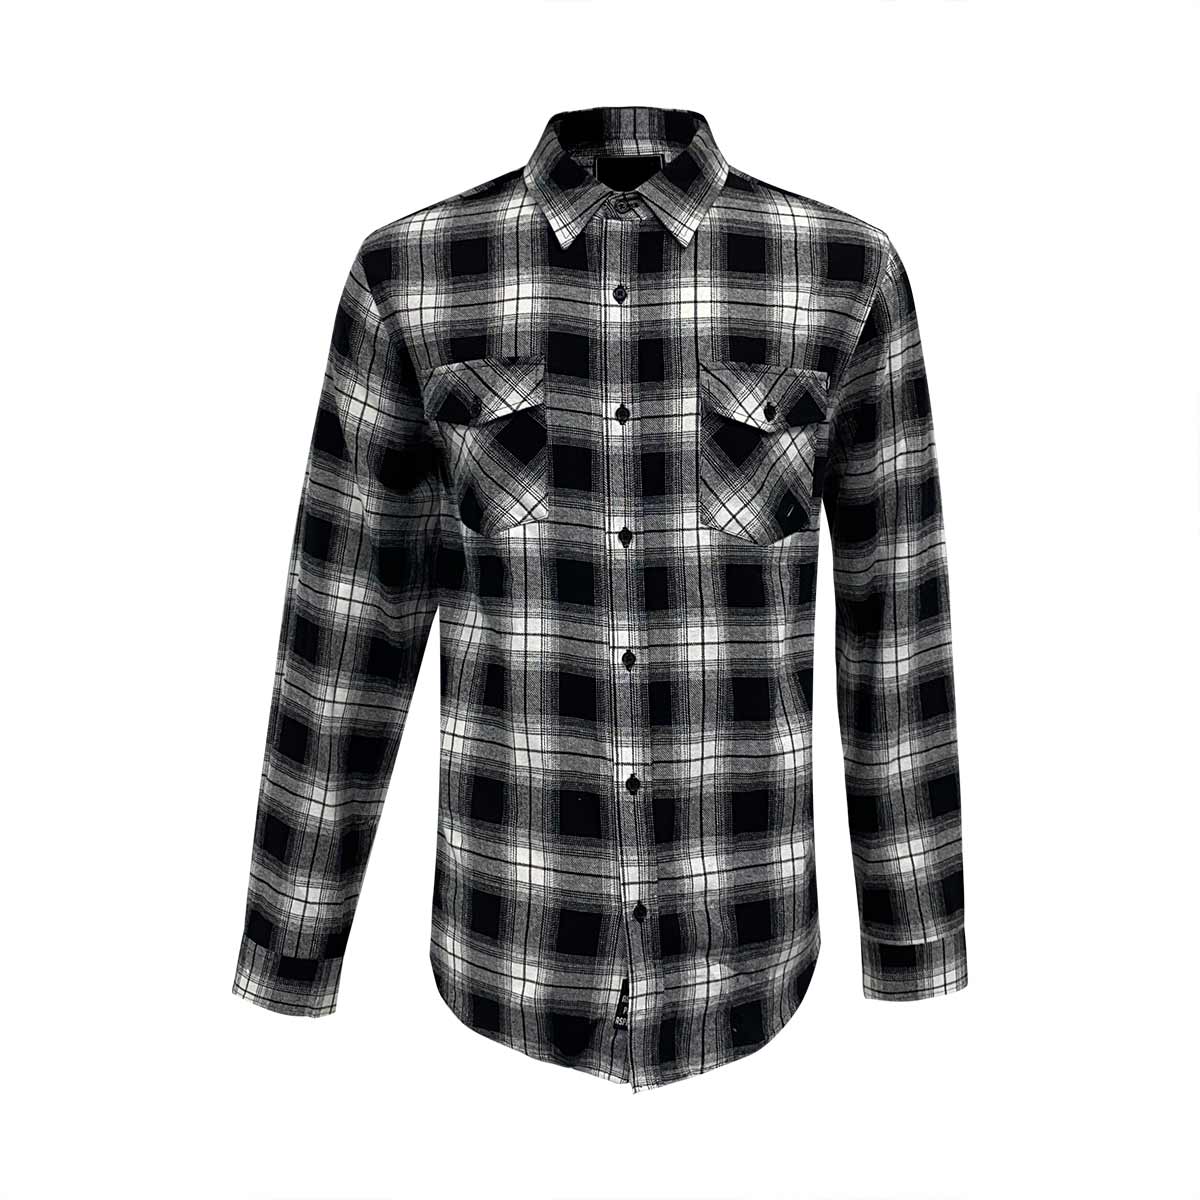 TianYun Black plaids classic style 100% cotton man flannel shirts